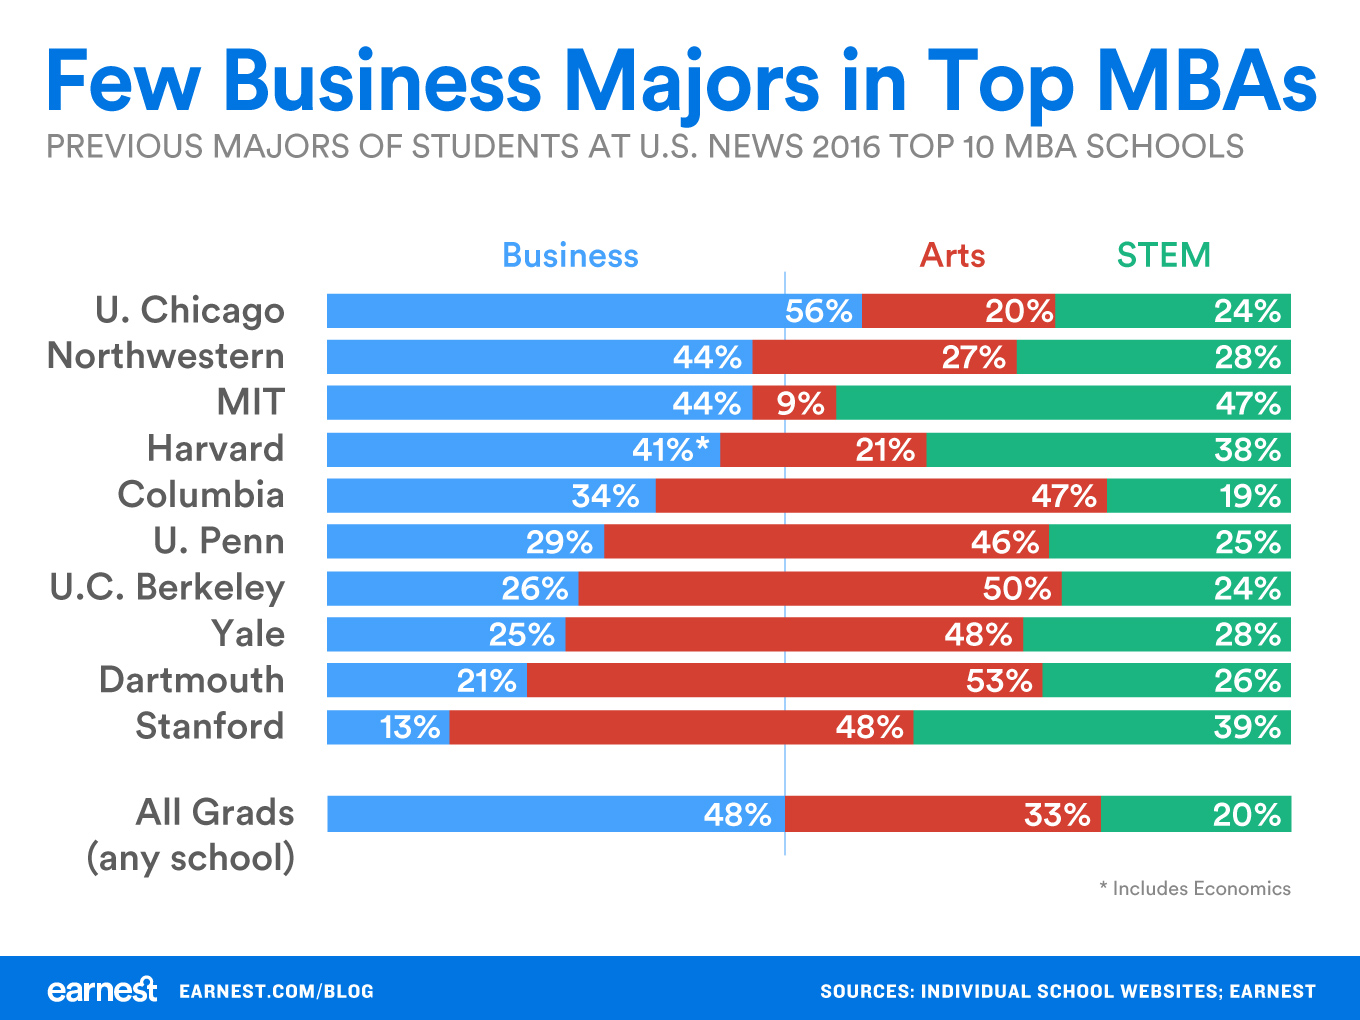 What Undergraduate do MBA Programs Want? - Earnest